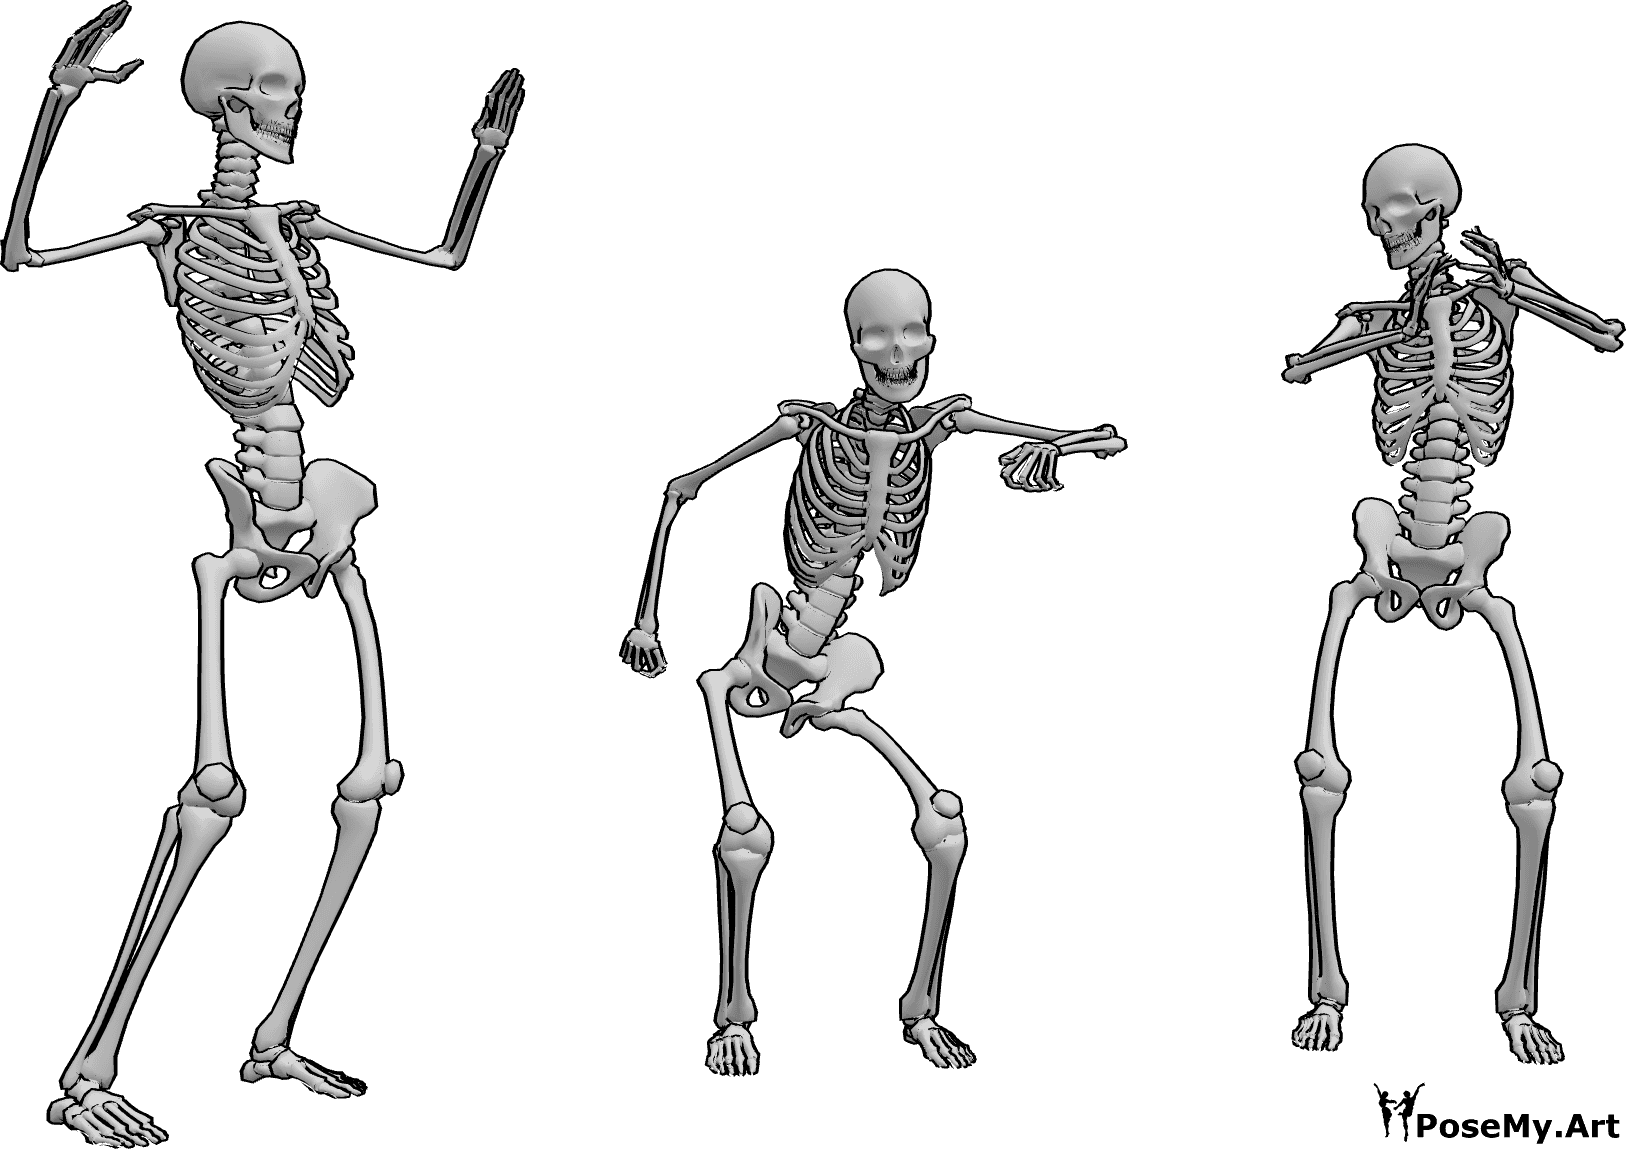 Pose Reference - Skeletons chicken dance pose - Three skeletons are dancing the chicken dance